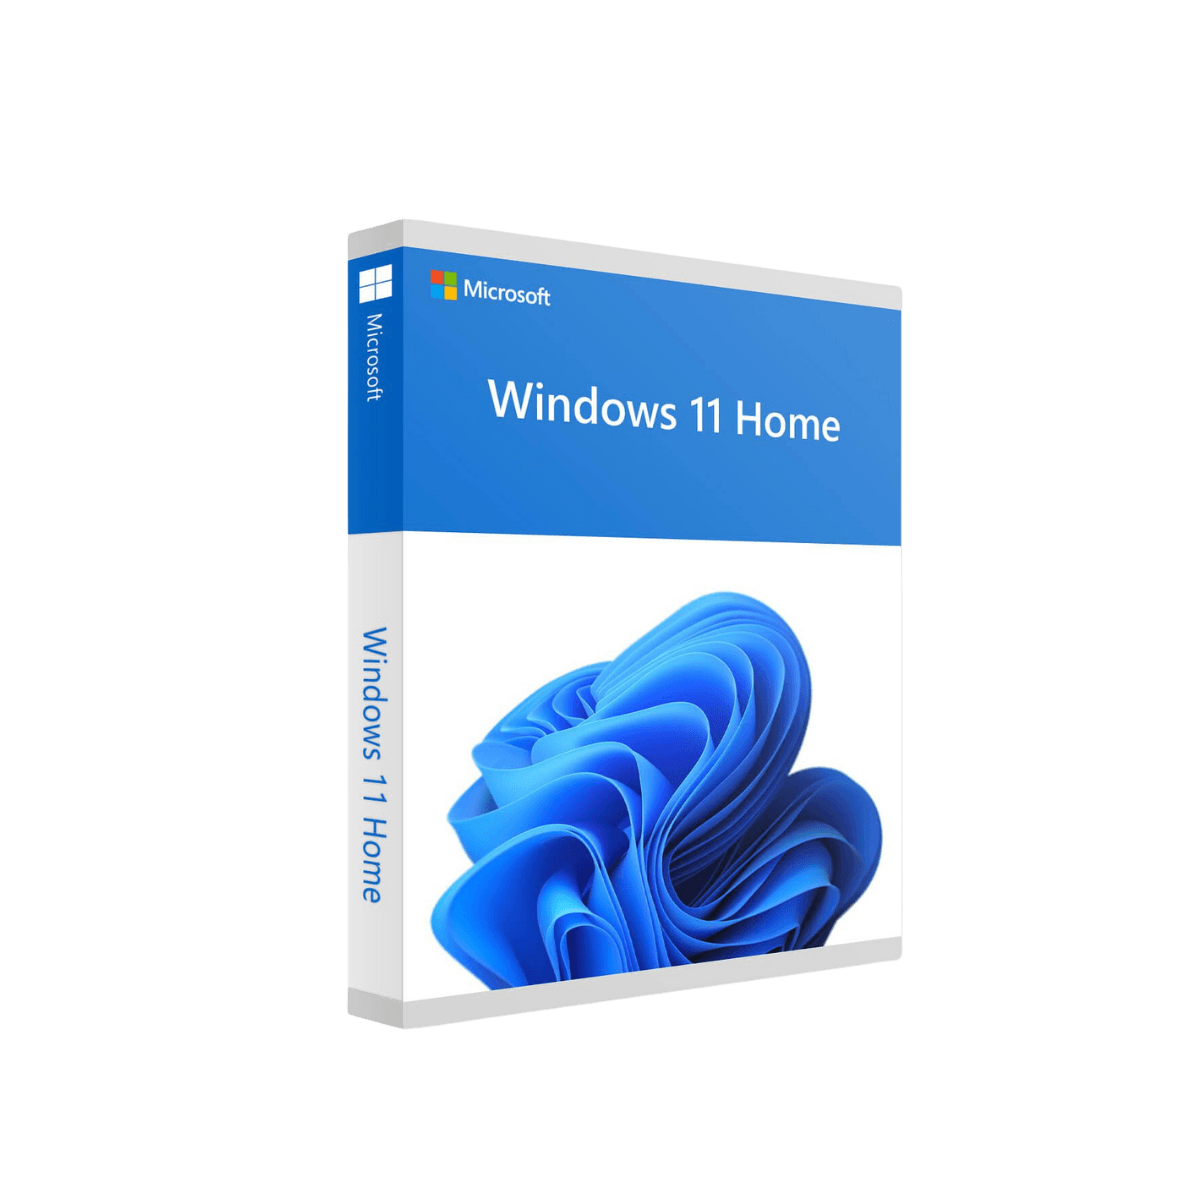 Microsoft Windows 11 Home - validvalley.com - Chave do produto, Chiave del prodotto, Clave del producto, Product Key, Produktschlüssel, Ürün Anahtarı